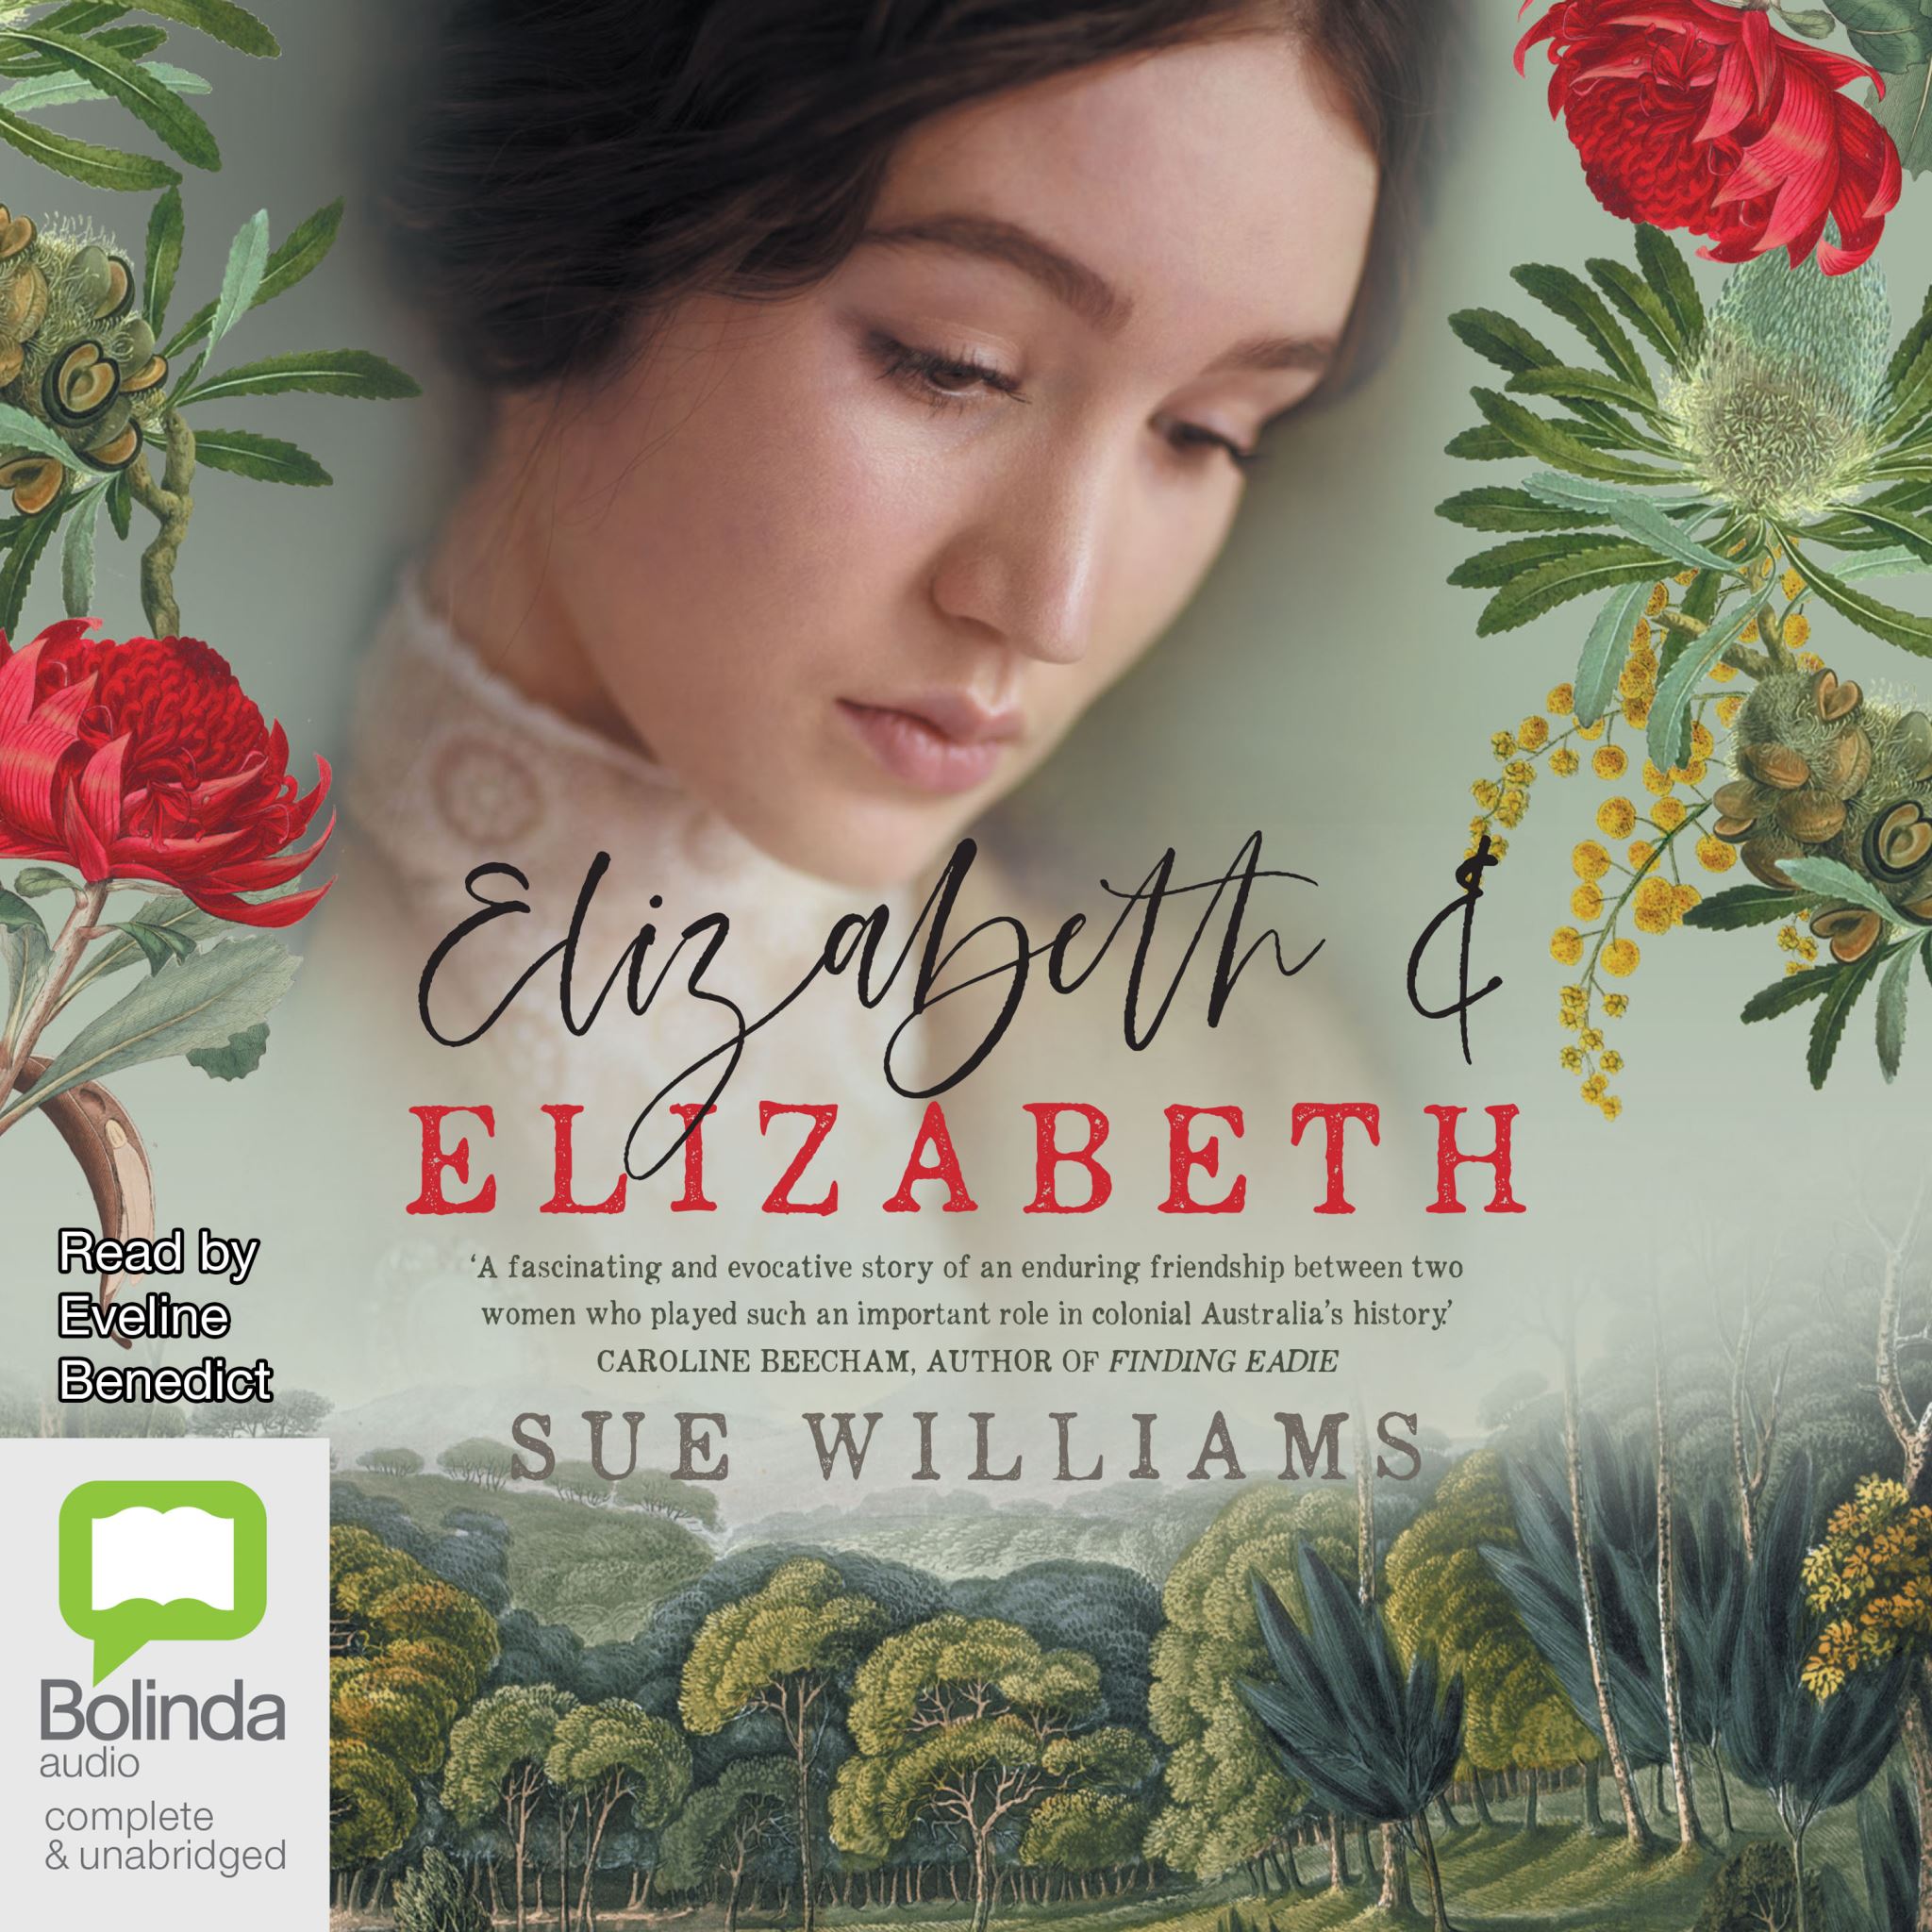 Elizabeth And Elizabeth - Unbridged Audio Book on CD